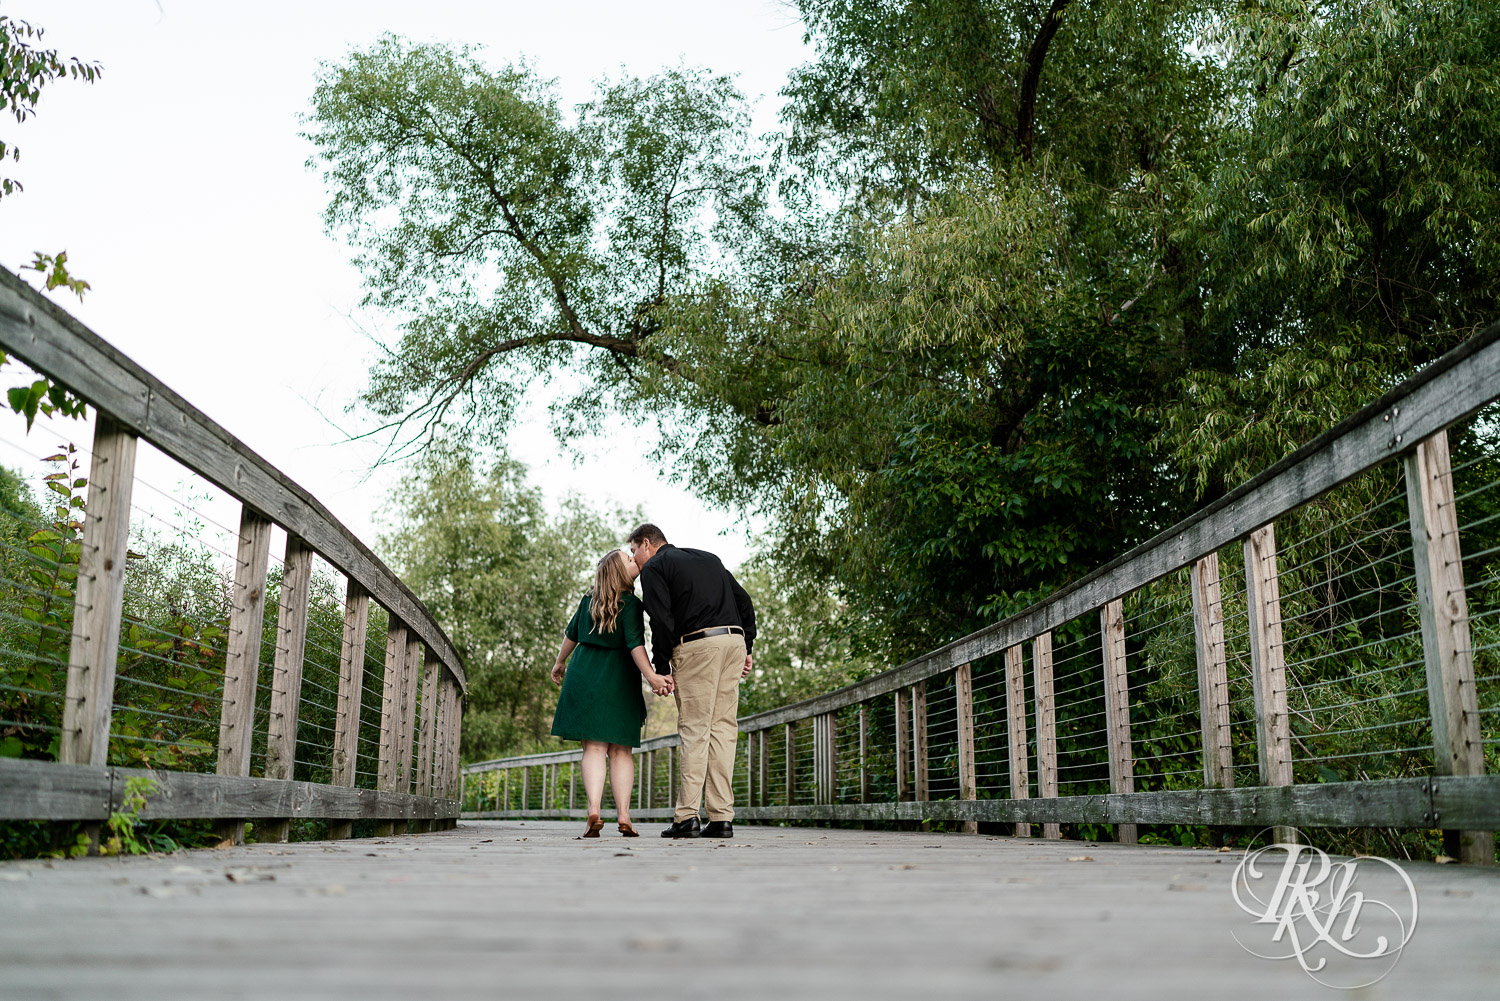 Man in black dress shirt walking with and kissing woman in green dress on a bridge in Eagan, Minnesota.